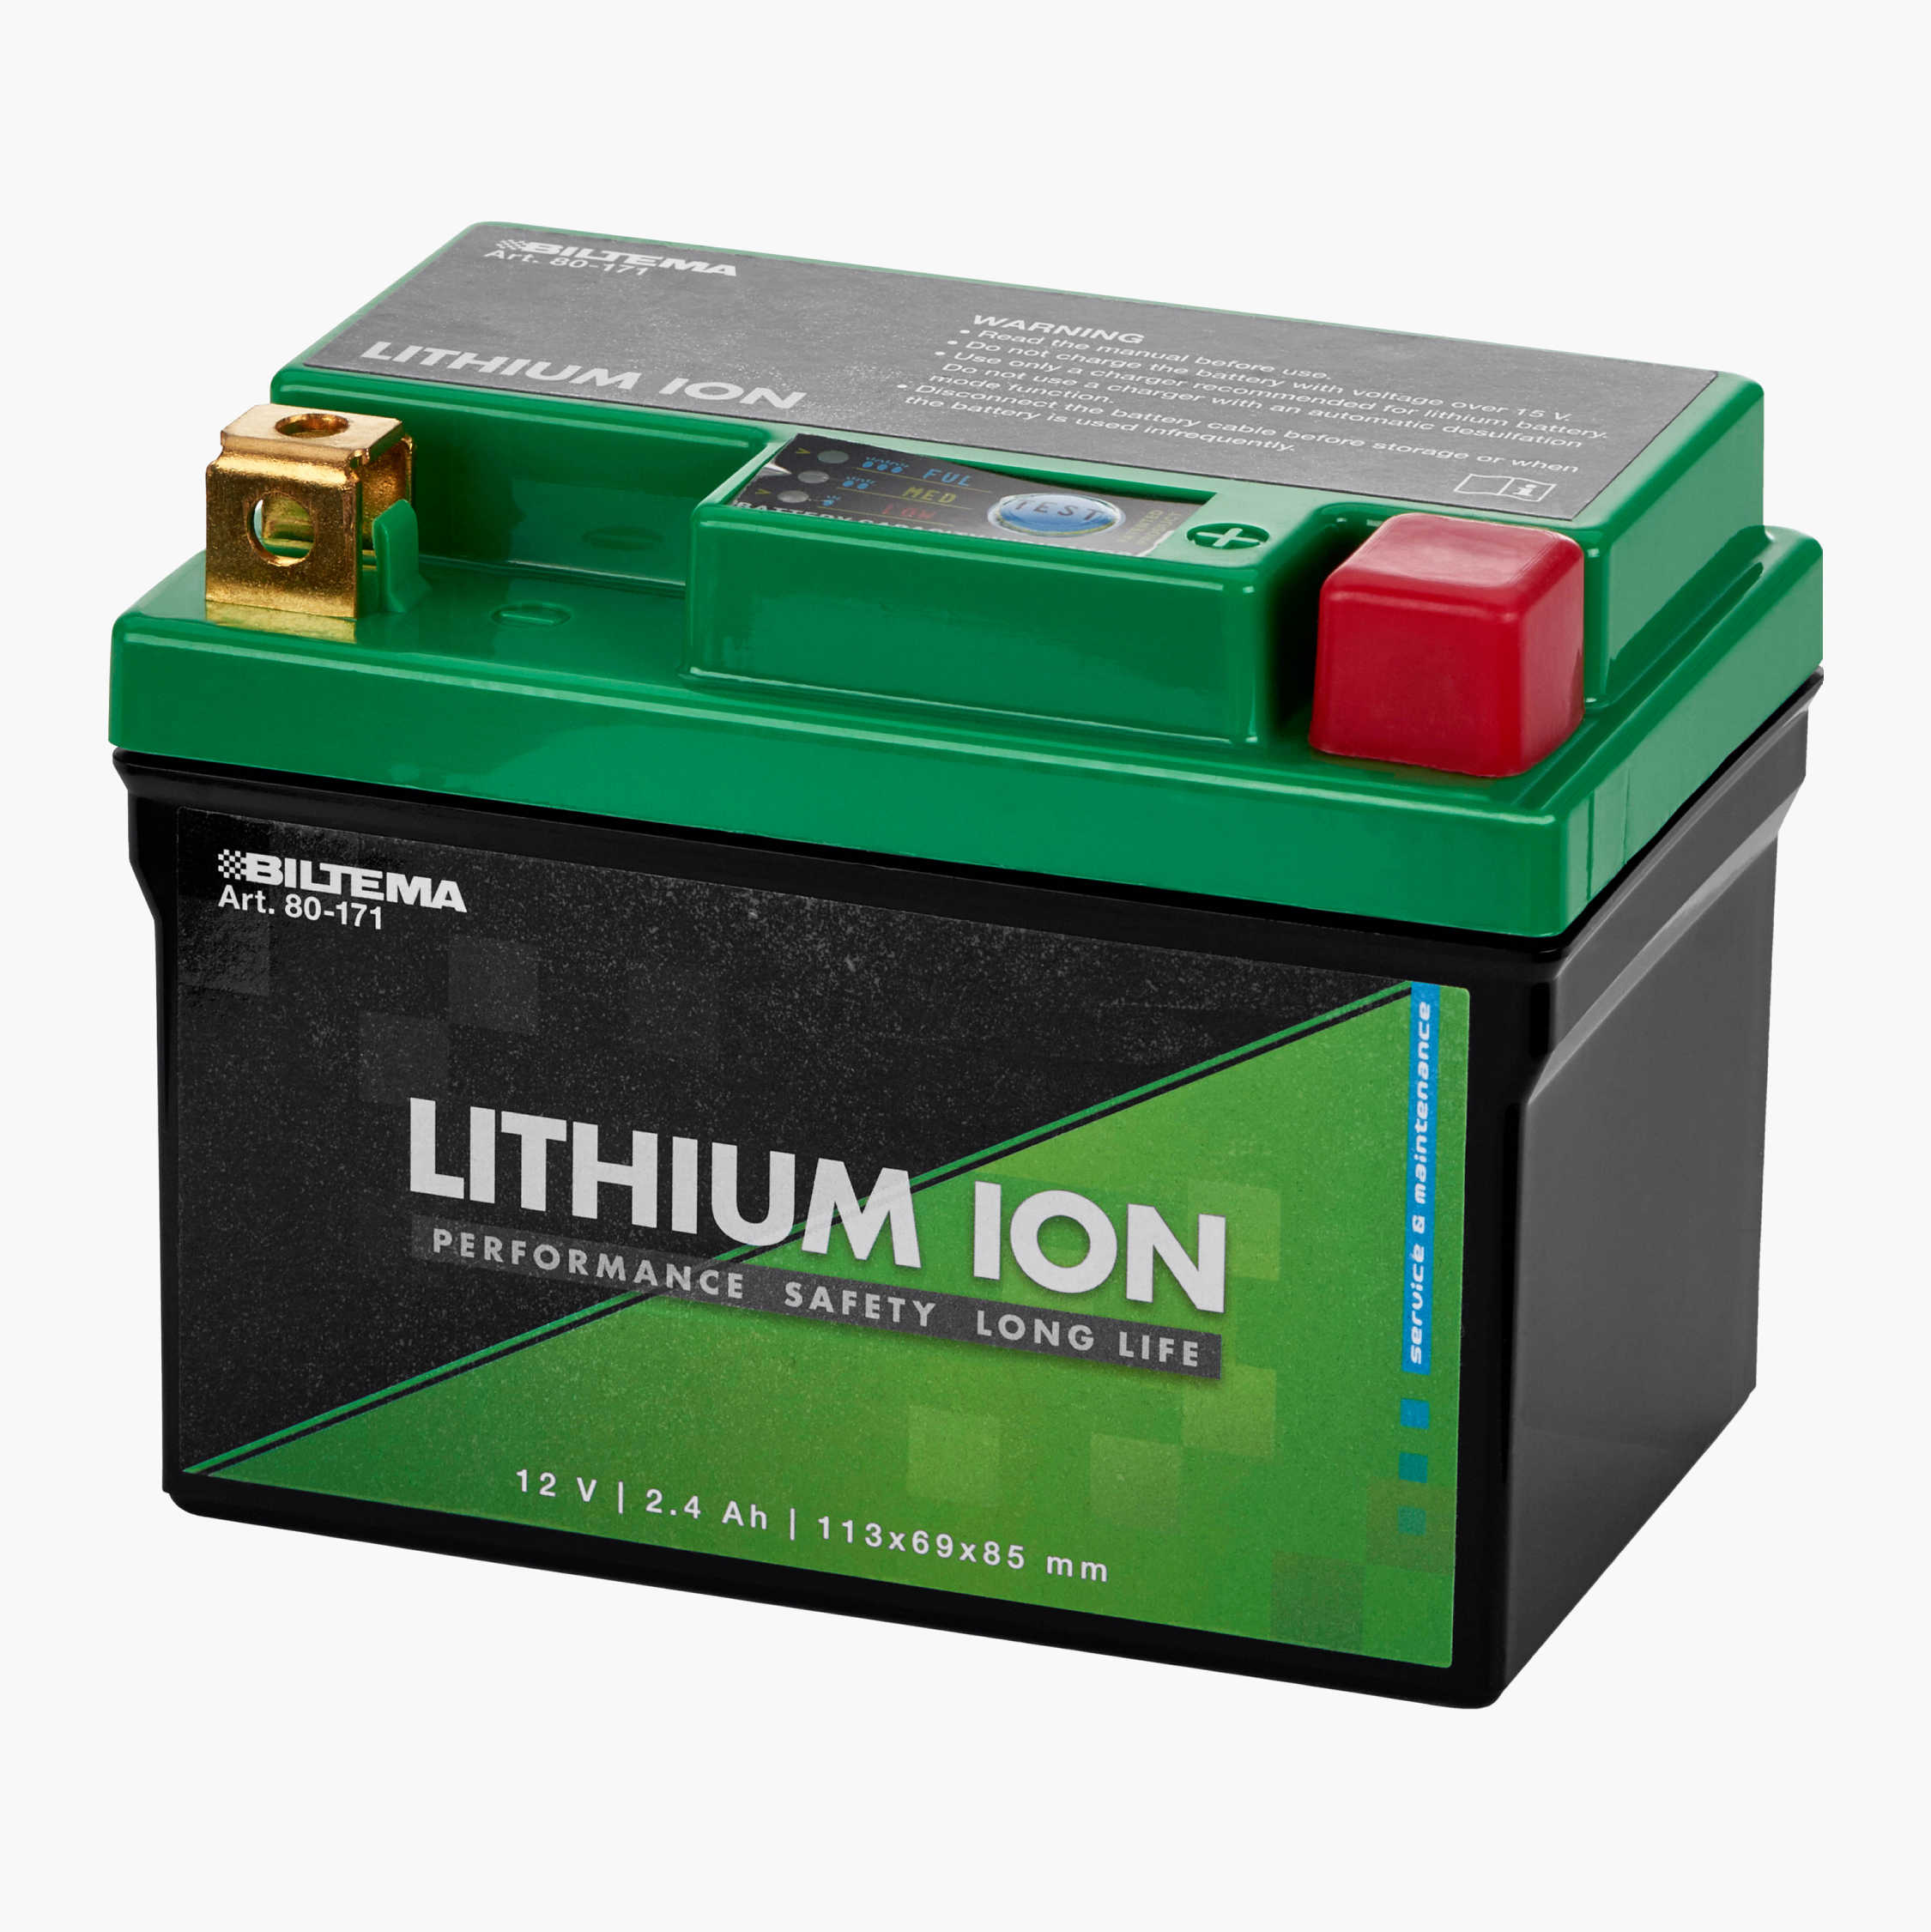 Sidelæns Og så videre Odysseus Litiumbatteri Litium LiFePO4, 12 V, 2,4 Ah, 113 x 69 x 85 mm - Biltema.dk